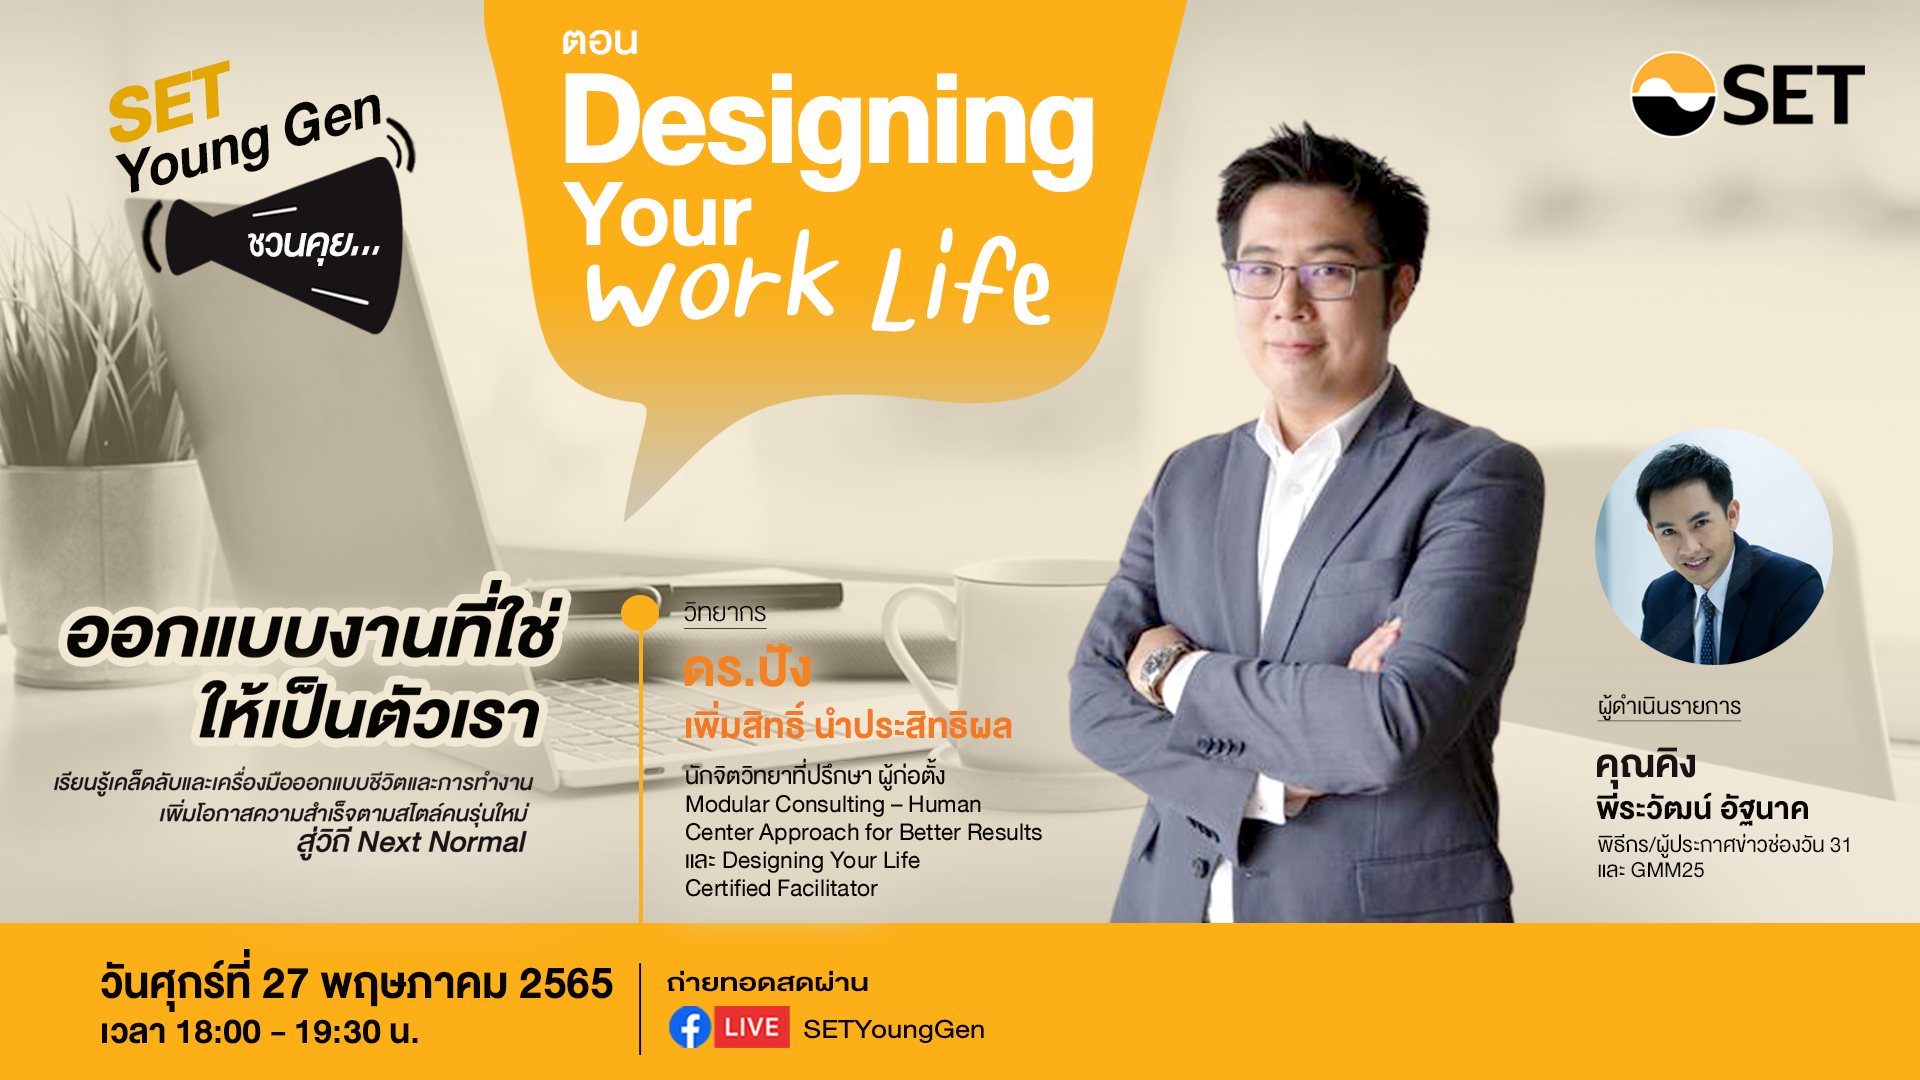 SET Young Gen ชวนคุย “Designing Your Work Life ออกแบบงานที่ใช่ ให้เป็นต้วเรา” 27 พ.ค. นี้